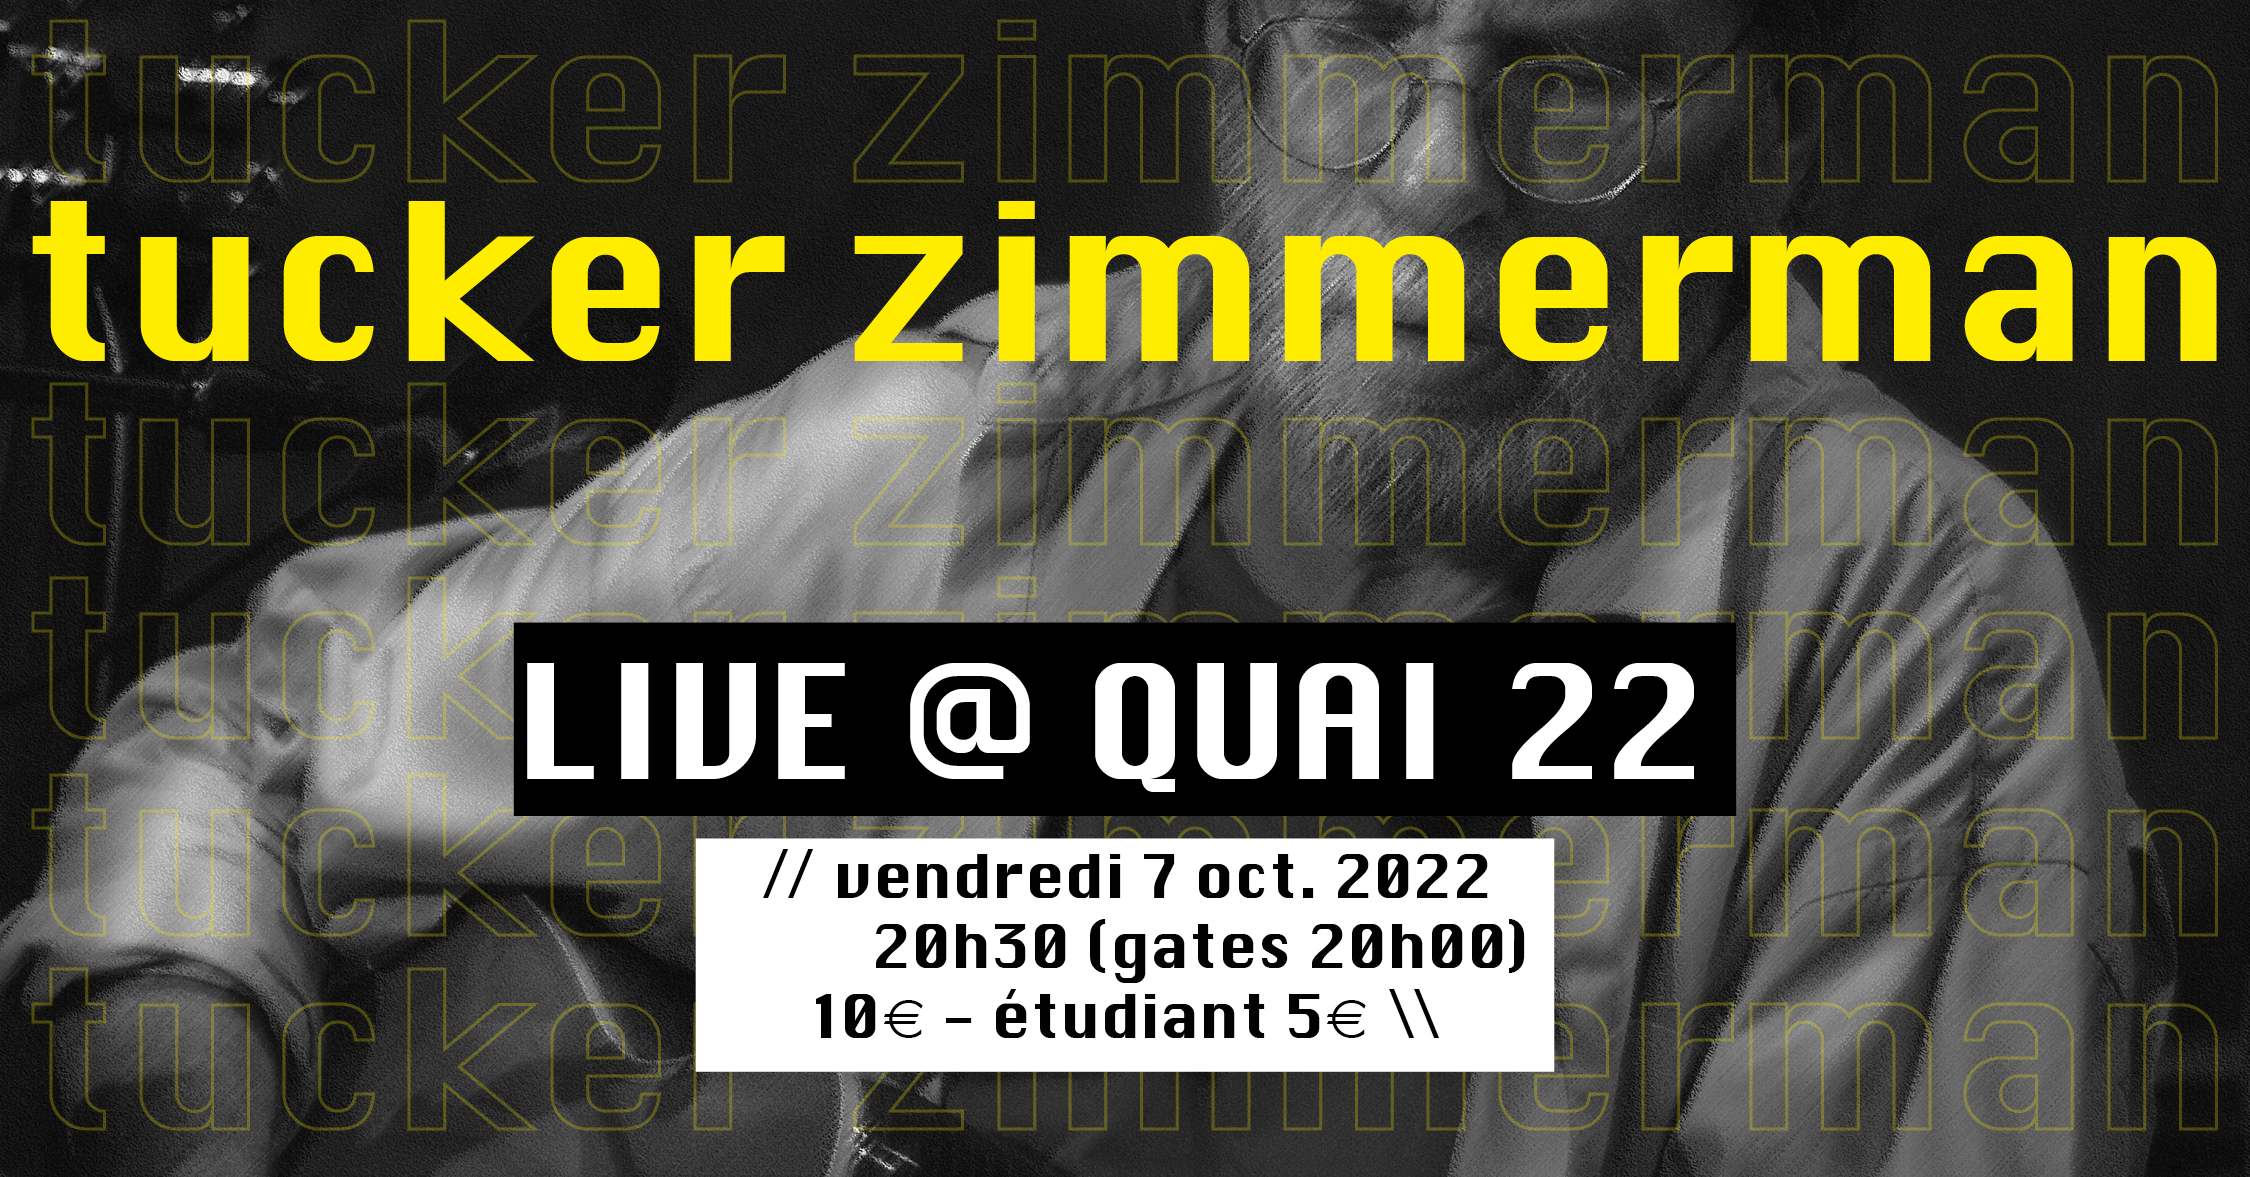 Concert Tucker Zimmerman au Quai 22